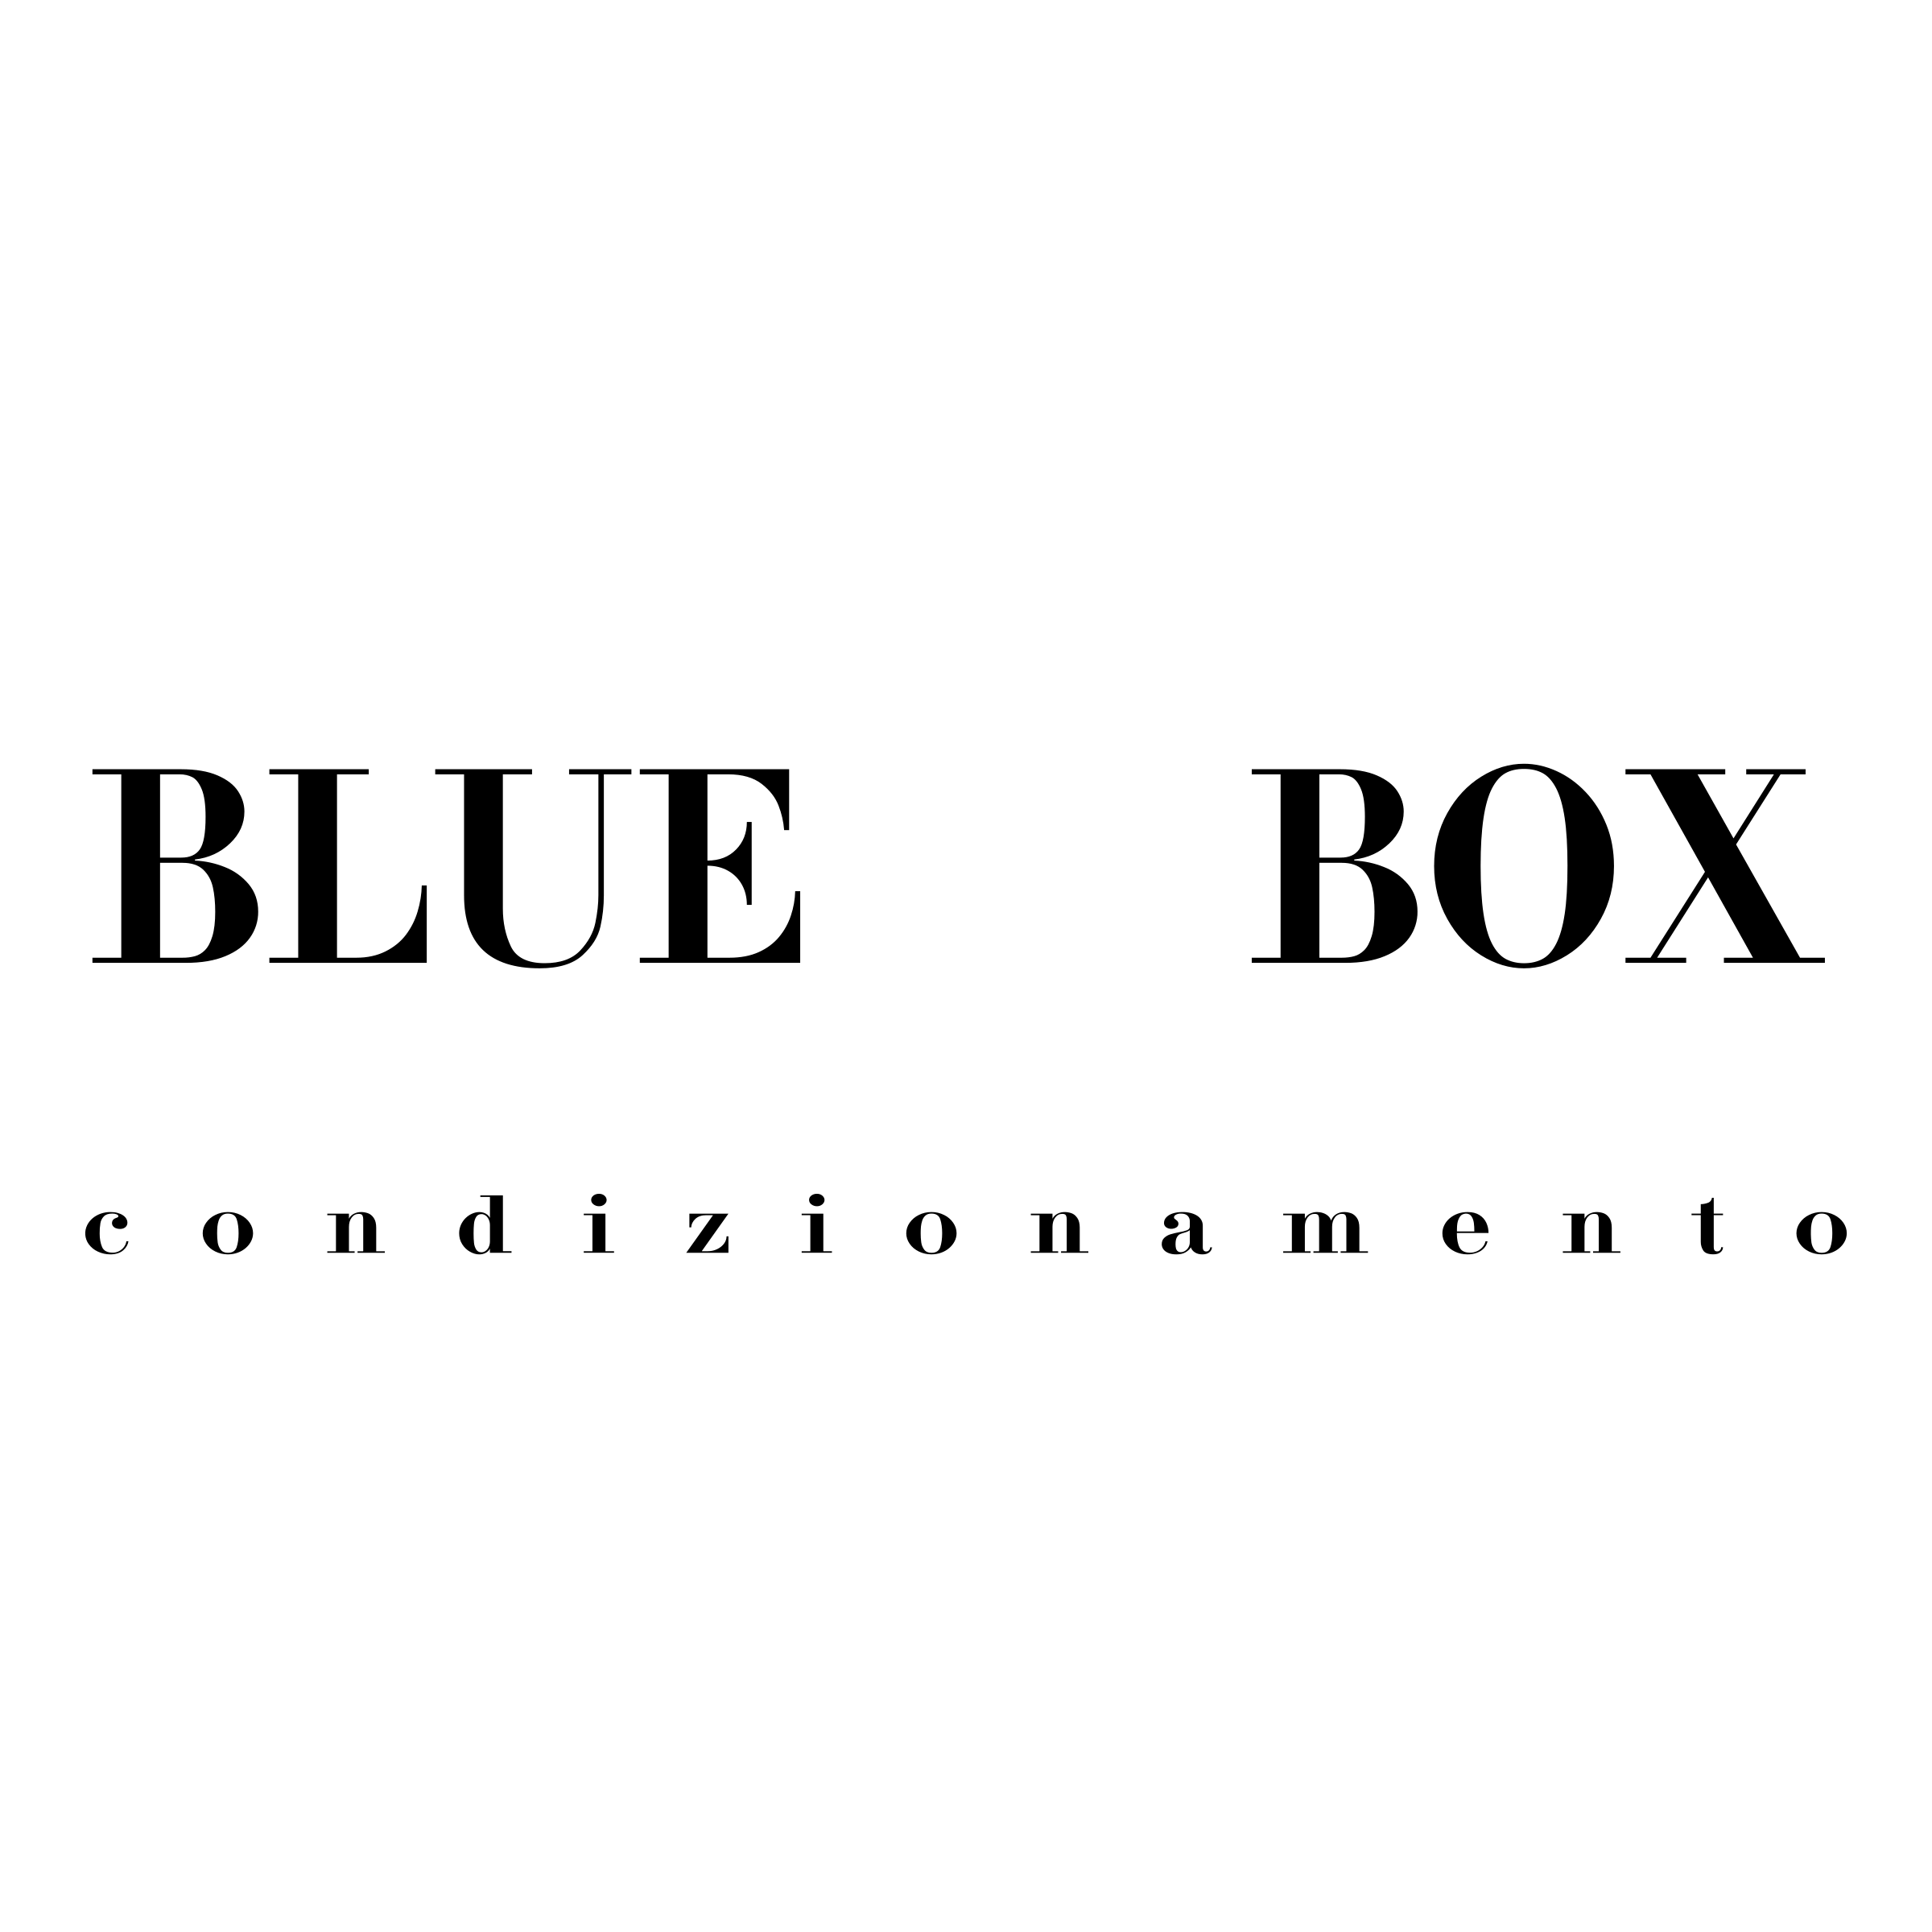 Blue Box with White a Logo - Blue Box Logo PNG Transparent & SVG Vector - Freebie Supply